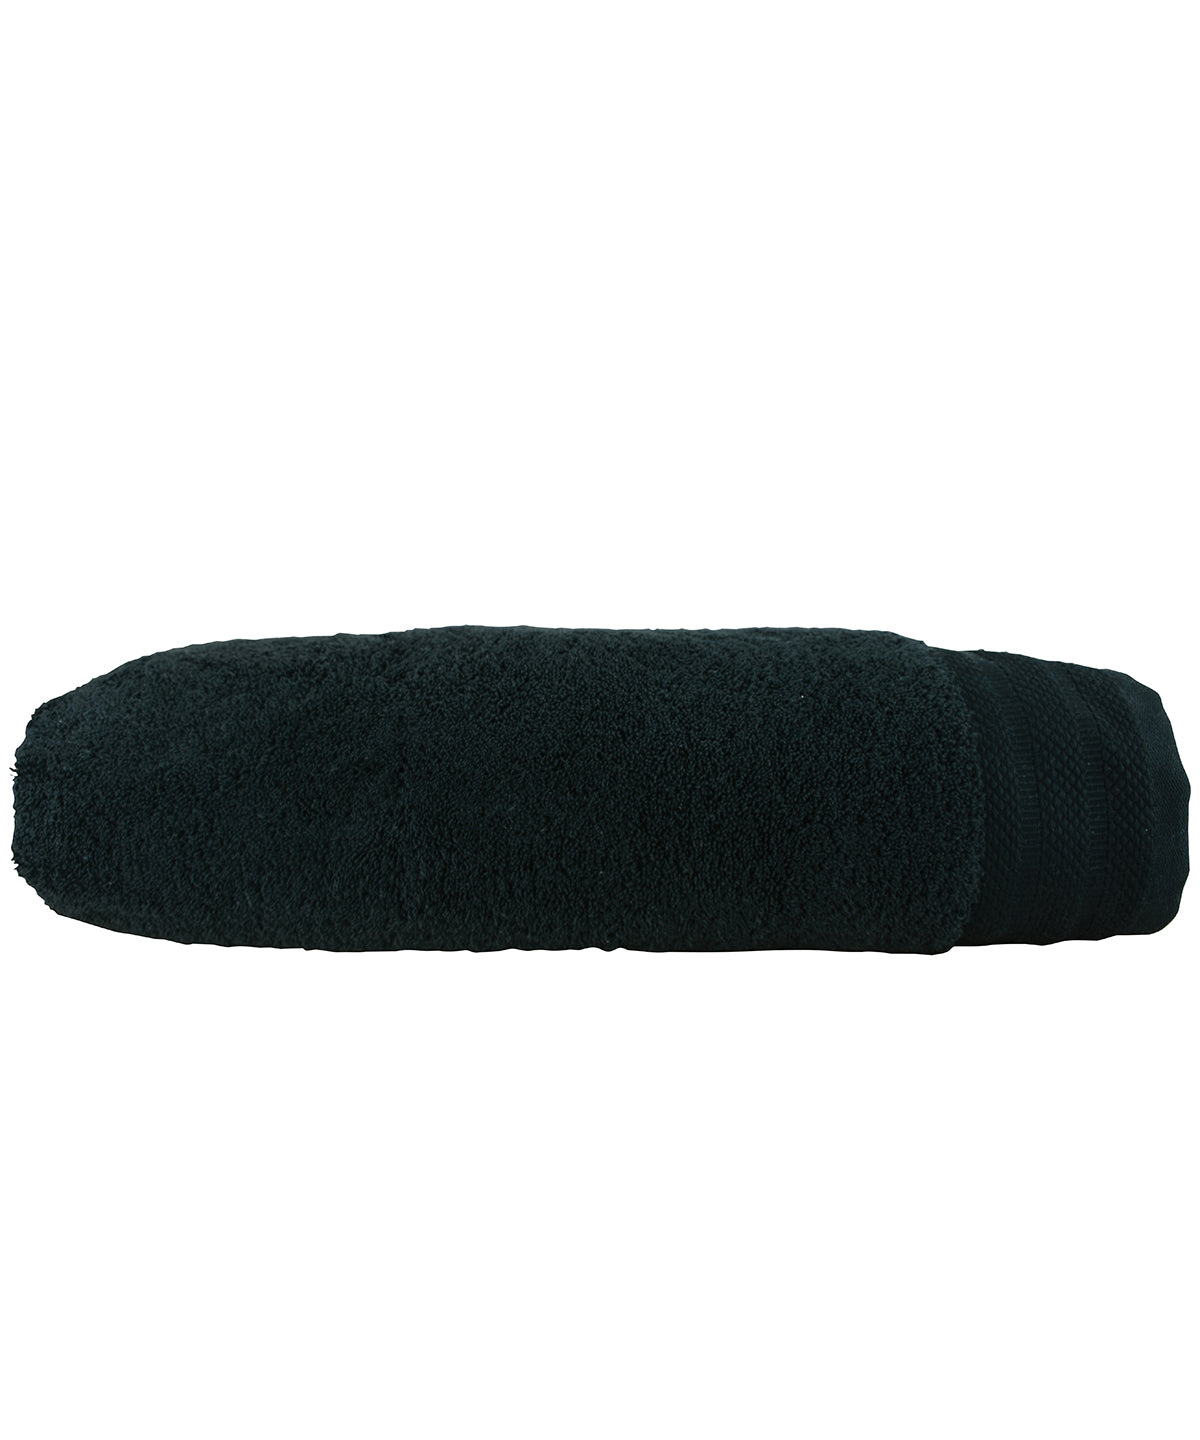 Personalised Towels - Black A&R Towels ARTG® pure luxe beach towel